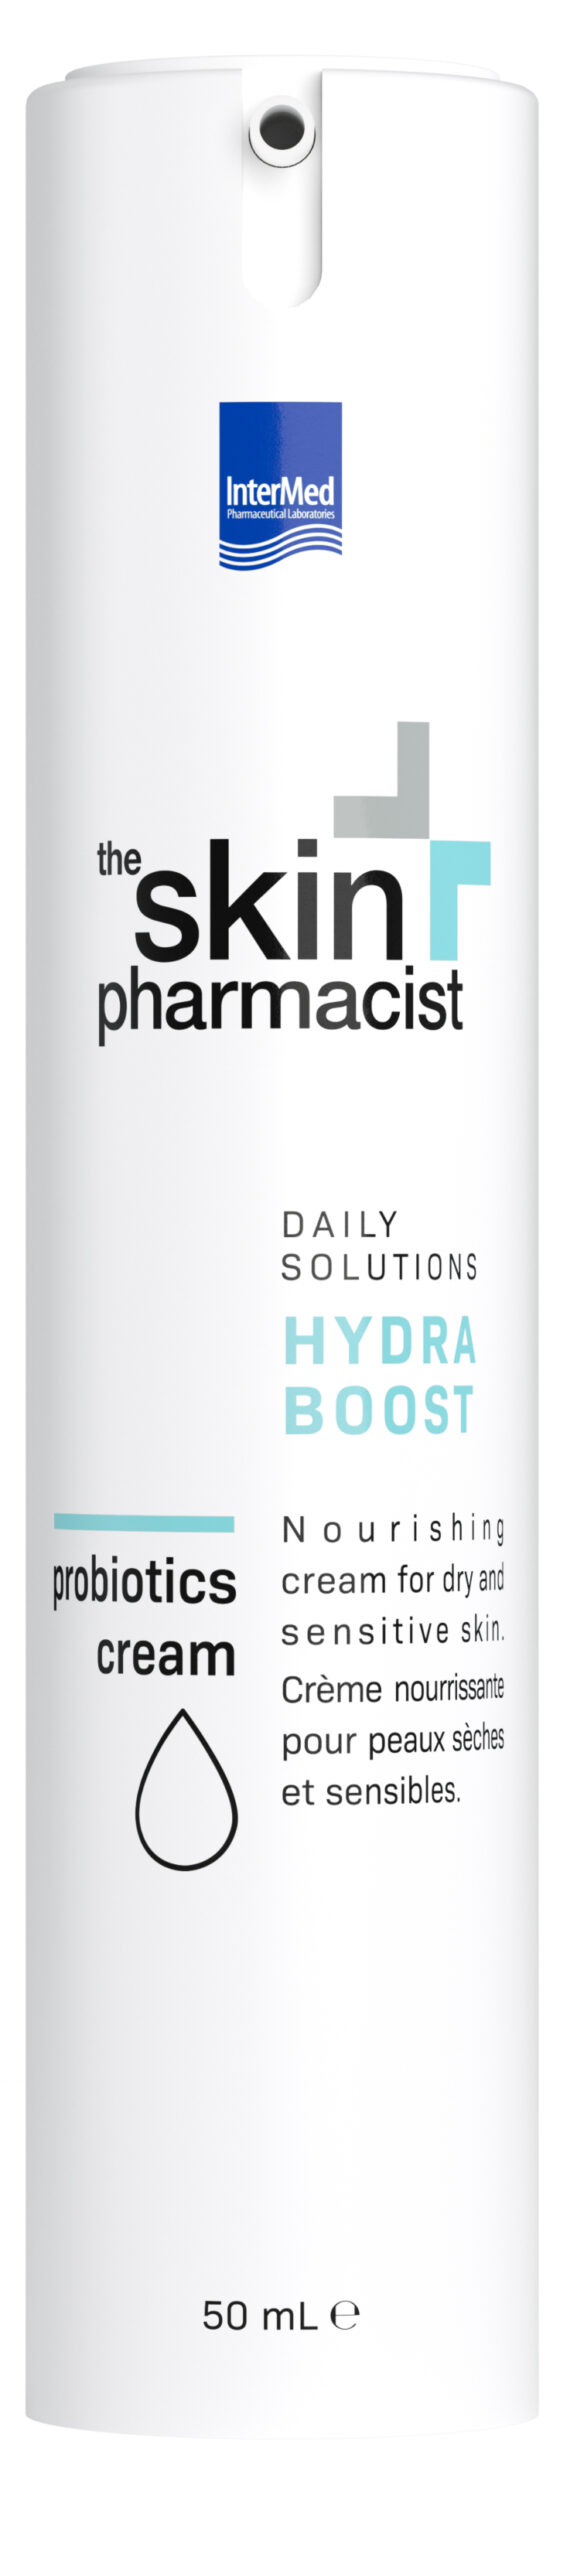 The Skin Pharmacist Hydra Boost Probiotics Cream από την InterMed.